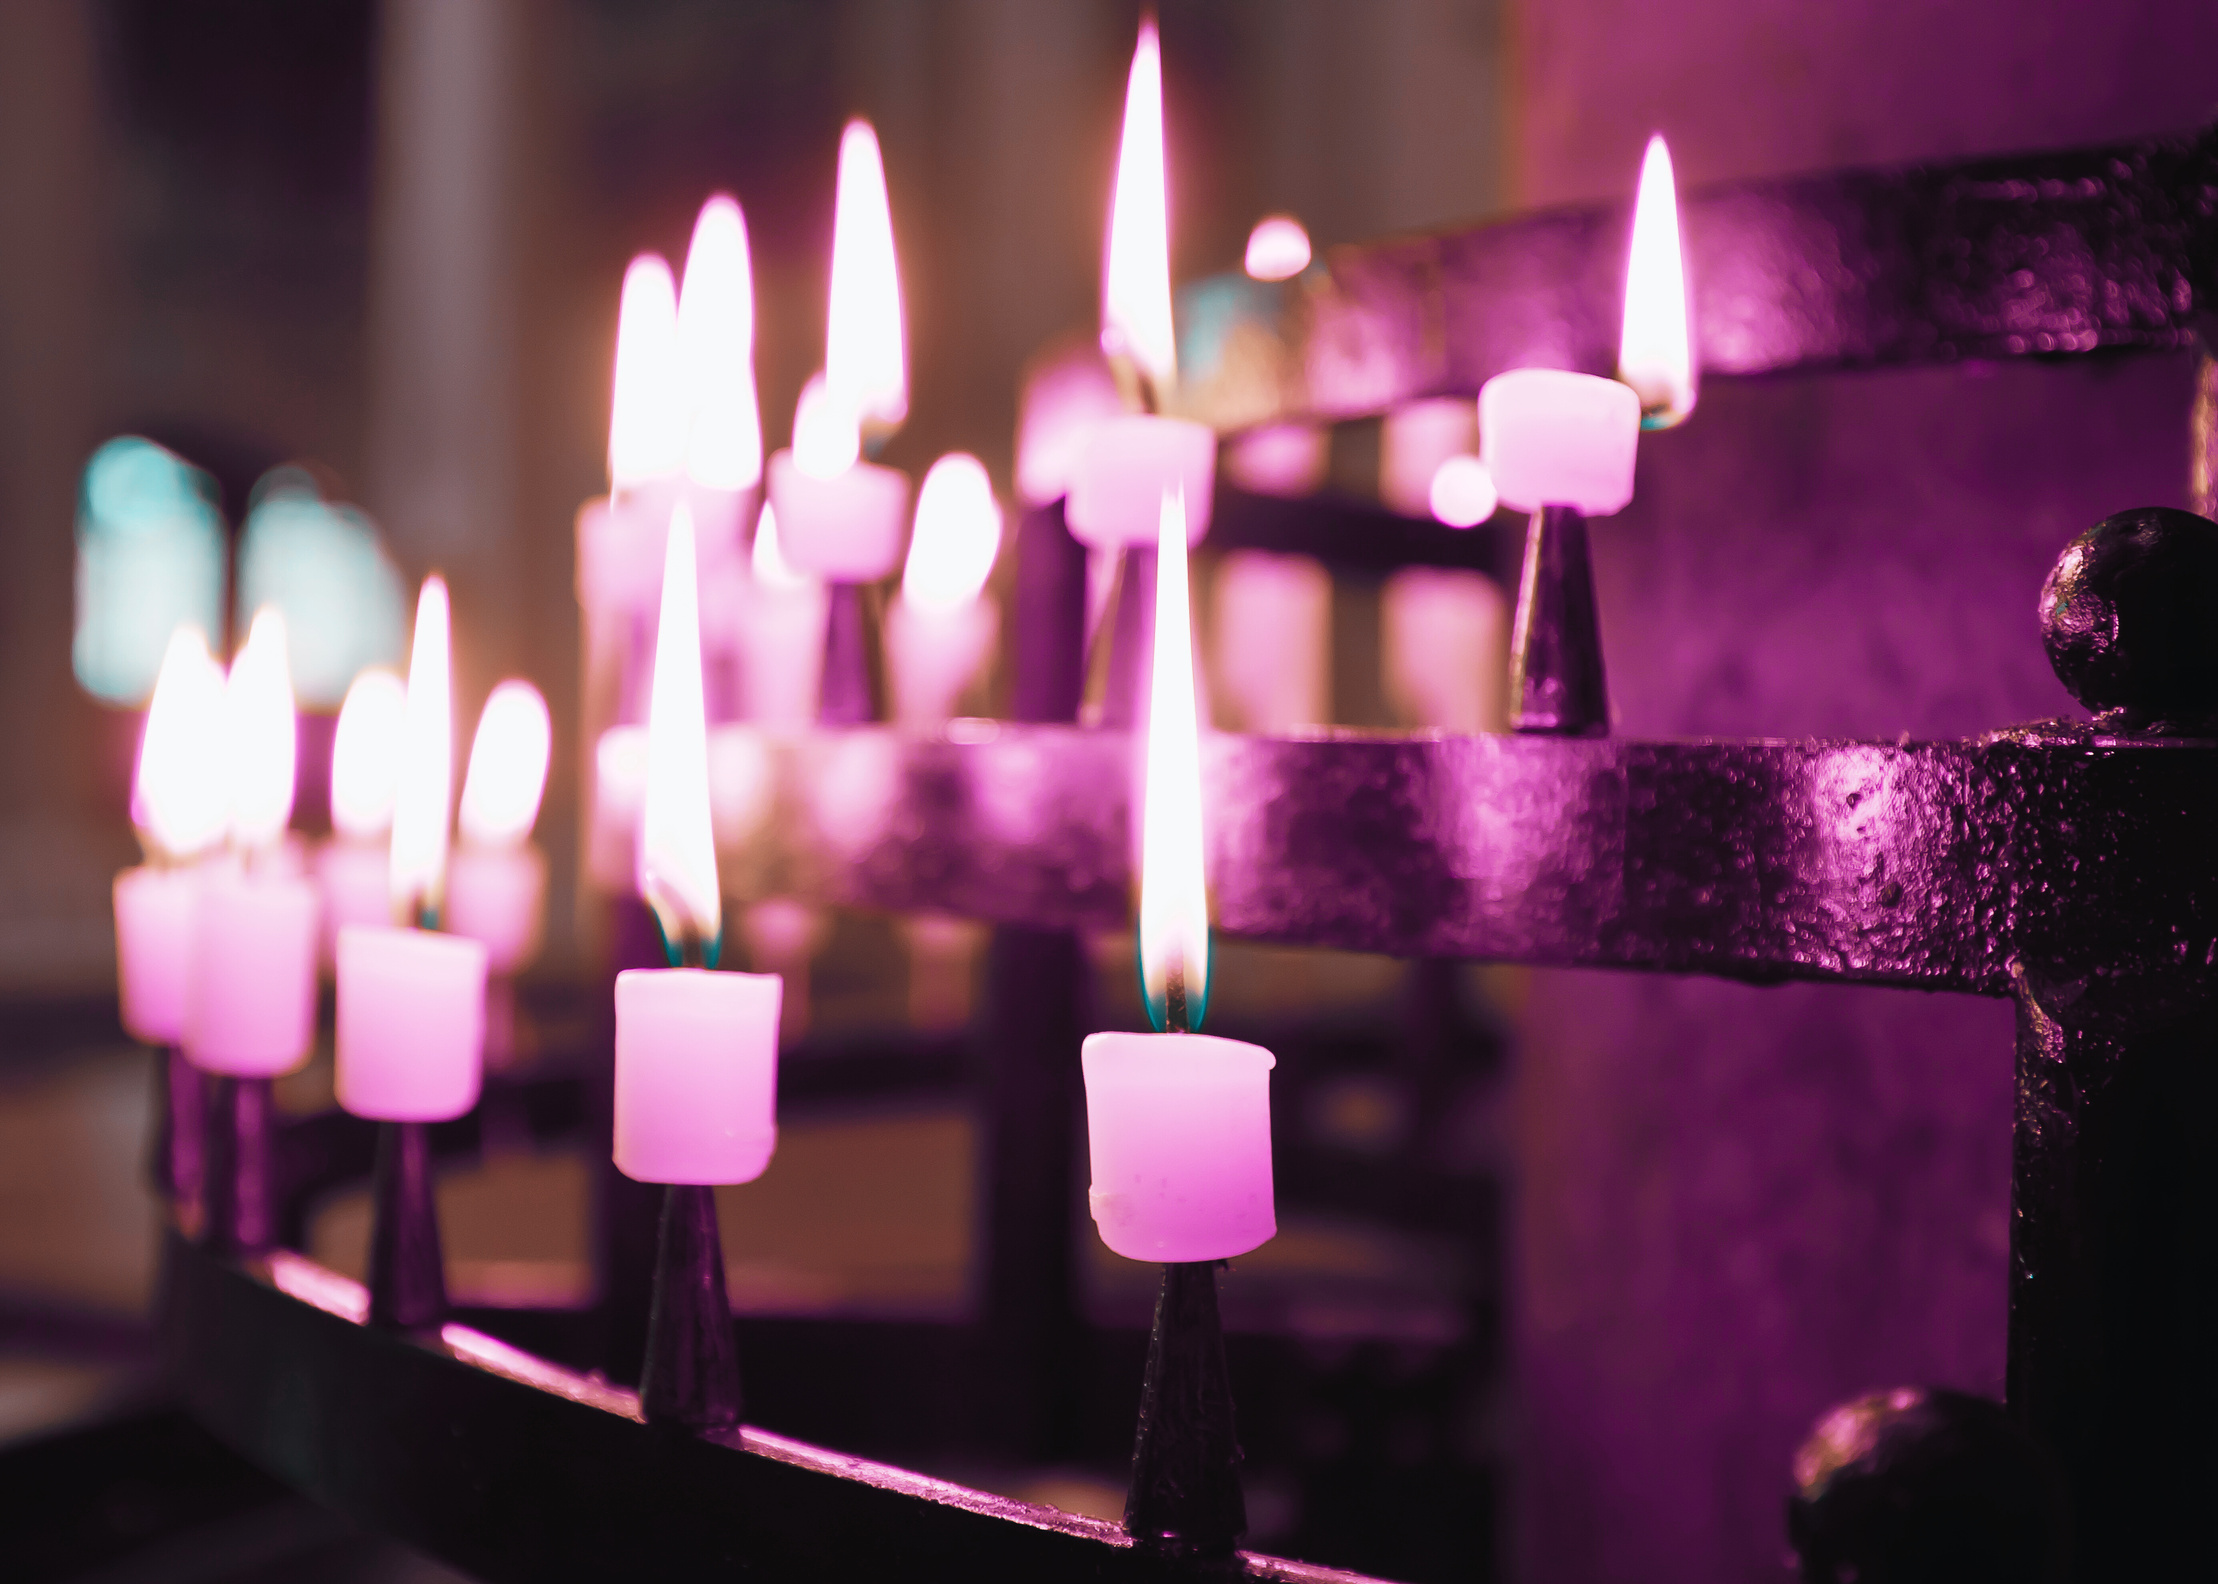 Lit Candles at a Church